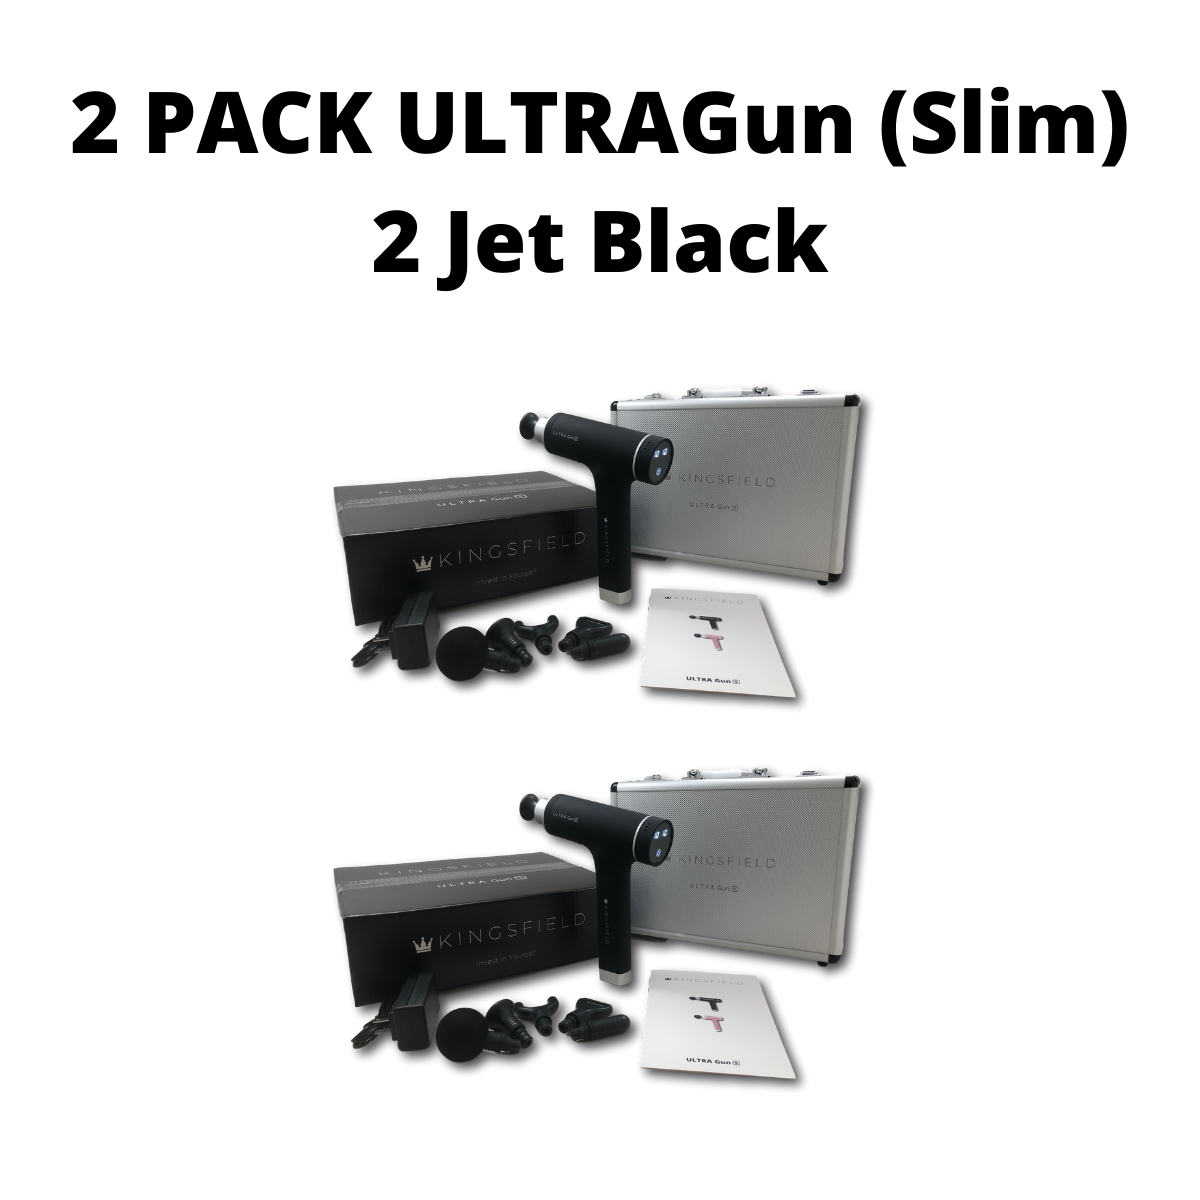 2 Pack ULTRAGun (Slim)